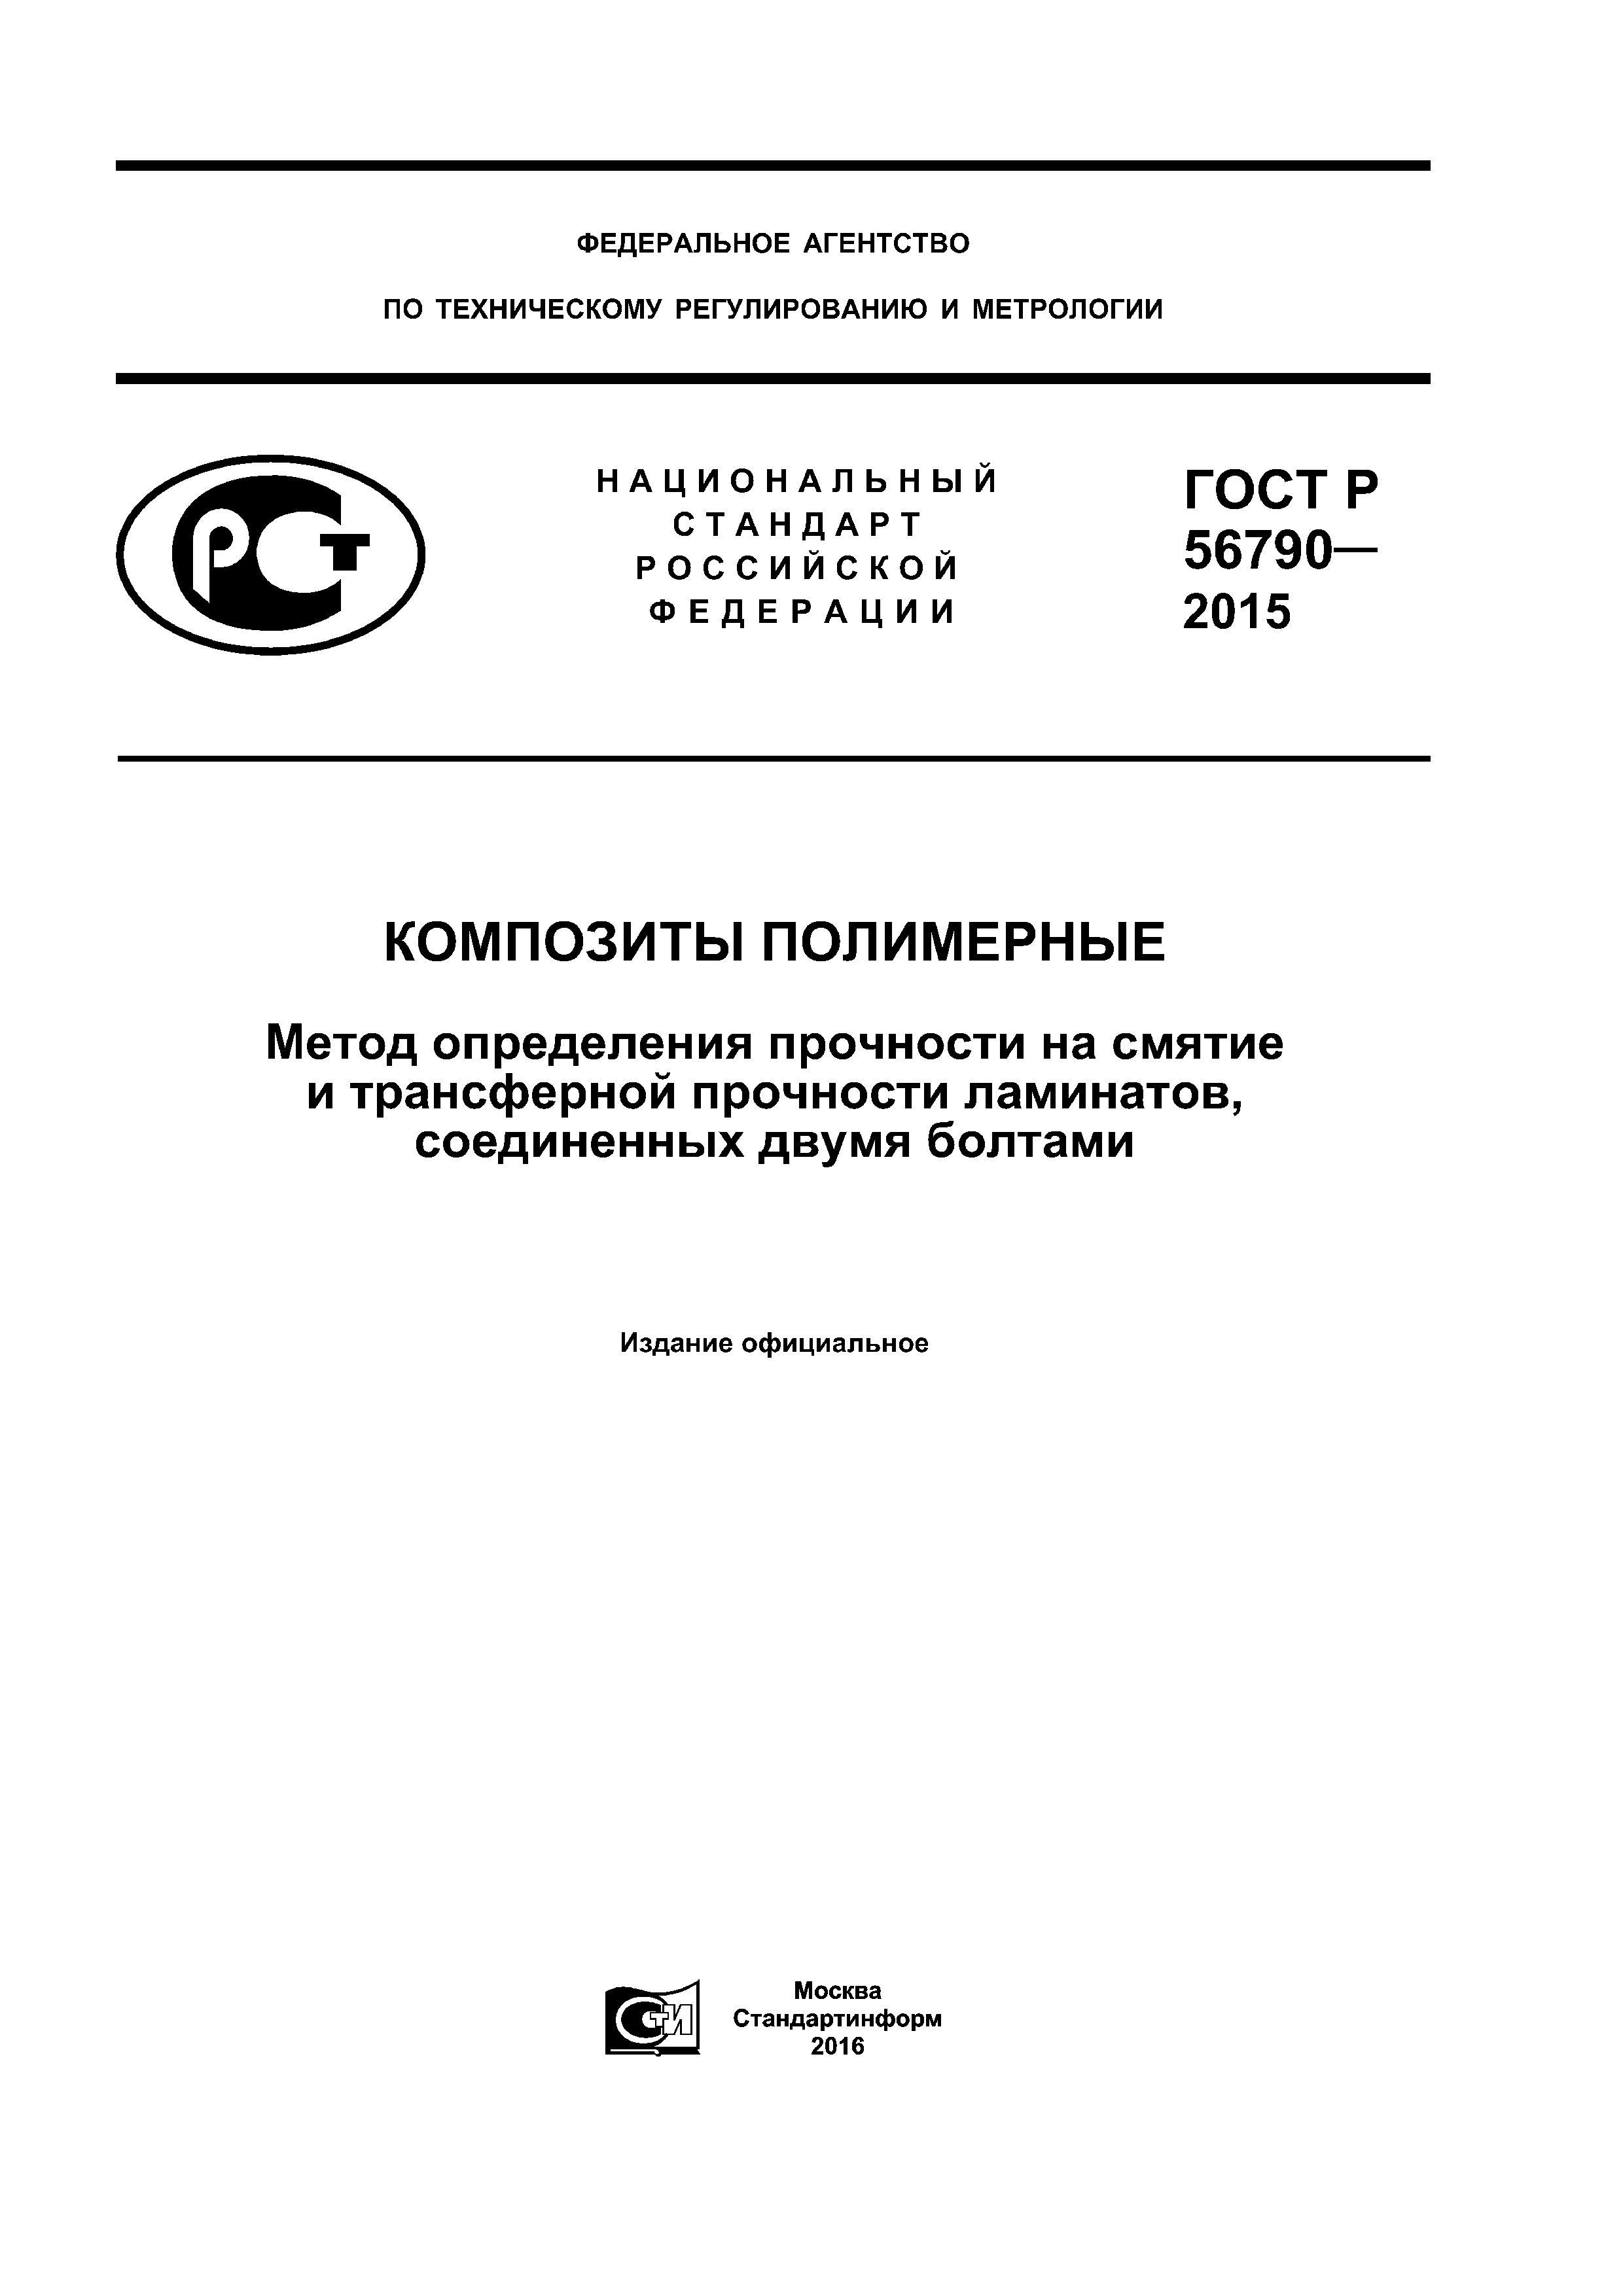 ГОСТ Р 56790-2015